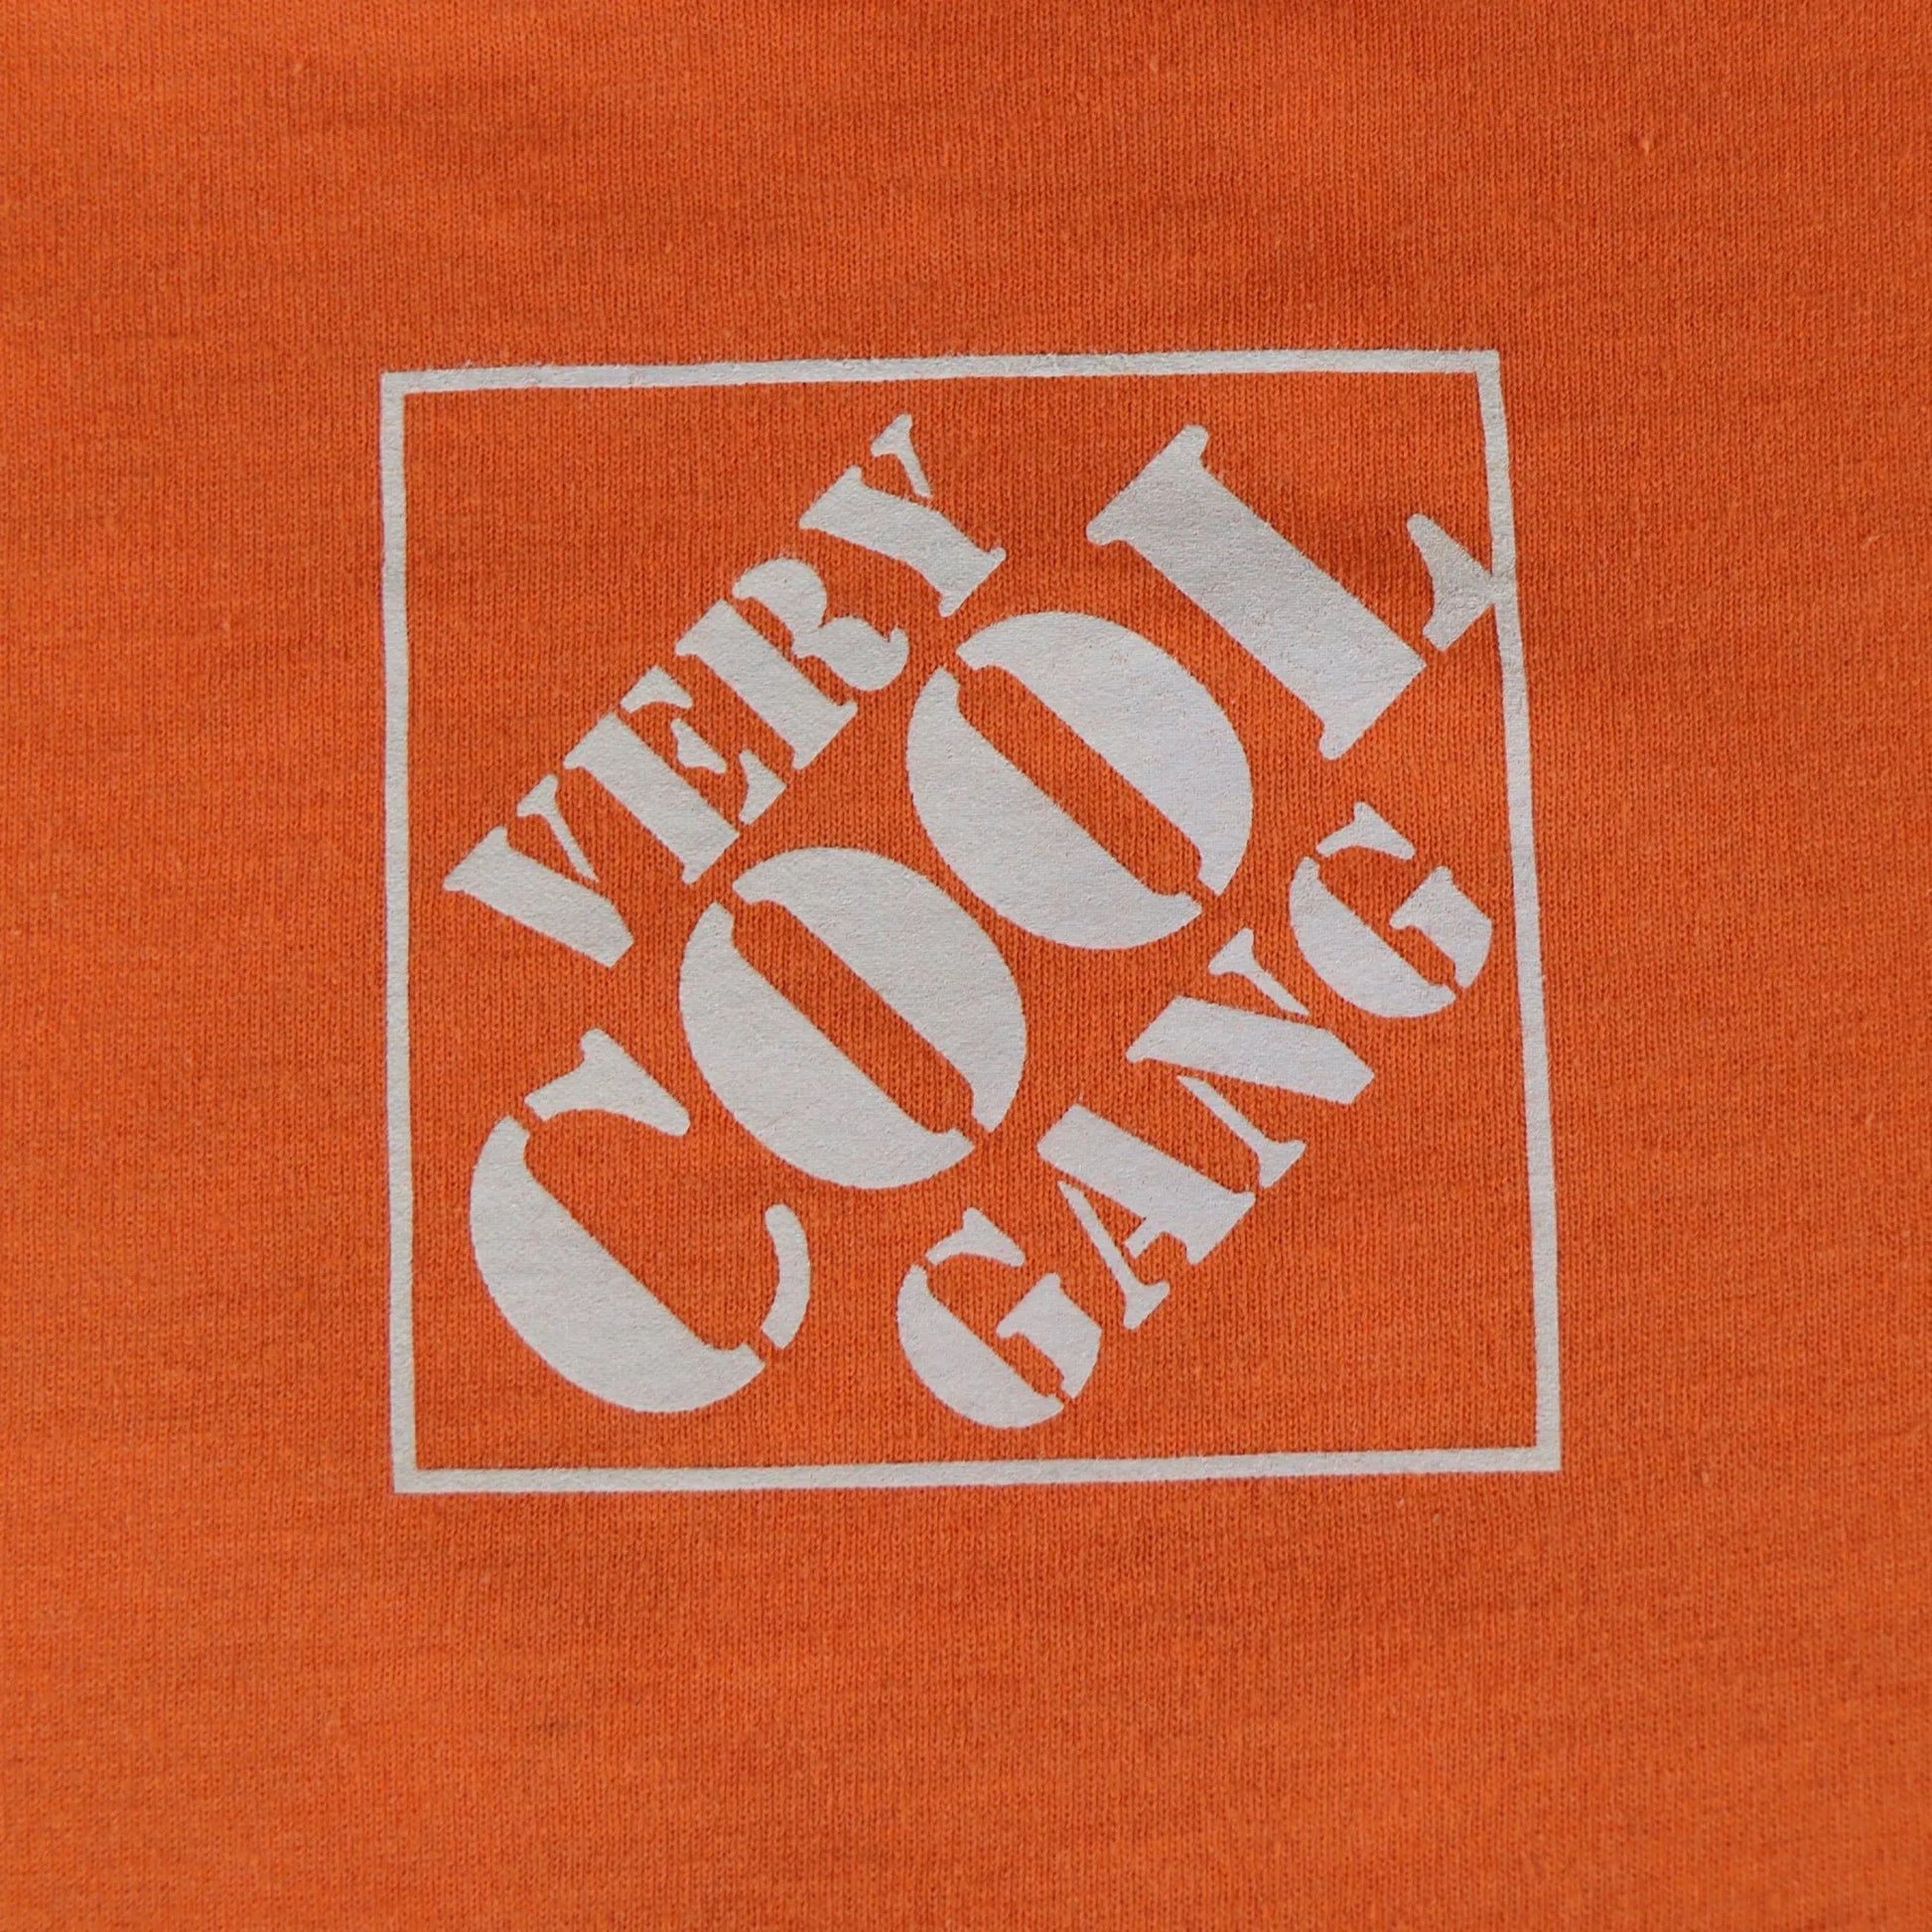 High Viz Orange Very Cool Gang t-shirt from VCG Construction front Logo